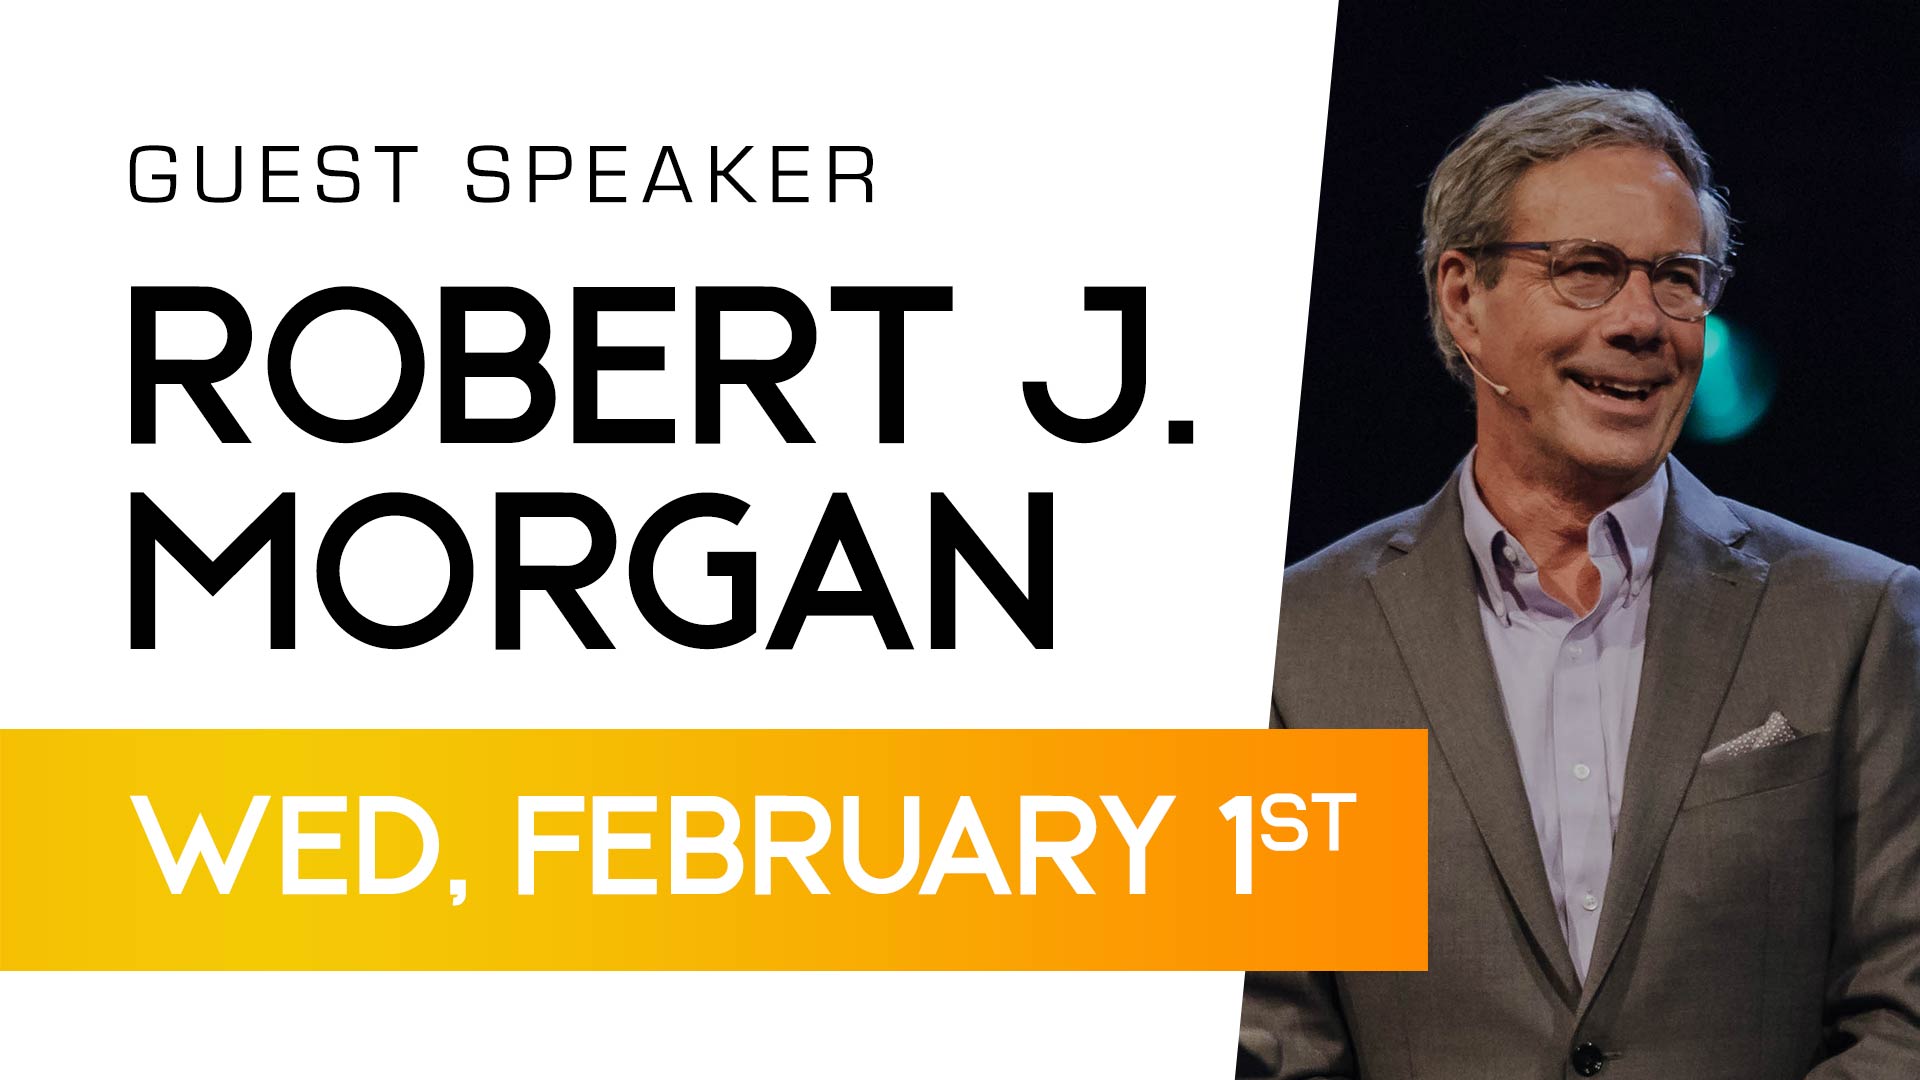 Robert J. Morgan – Feb. 1